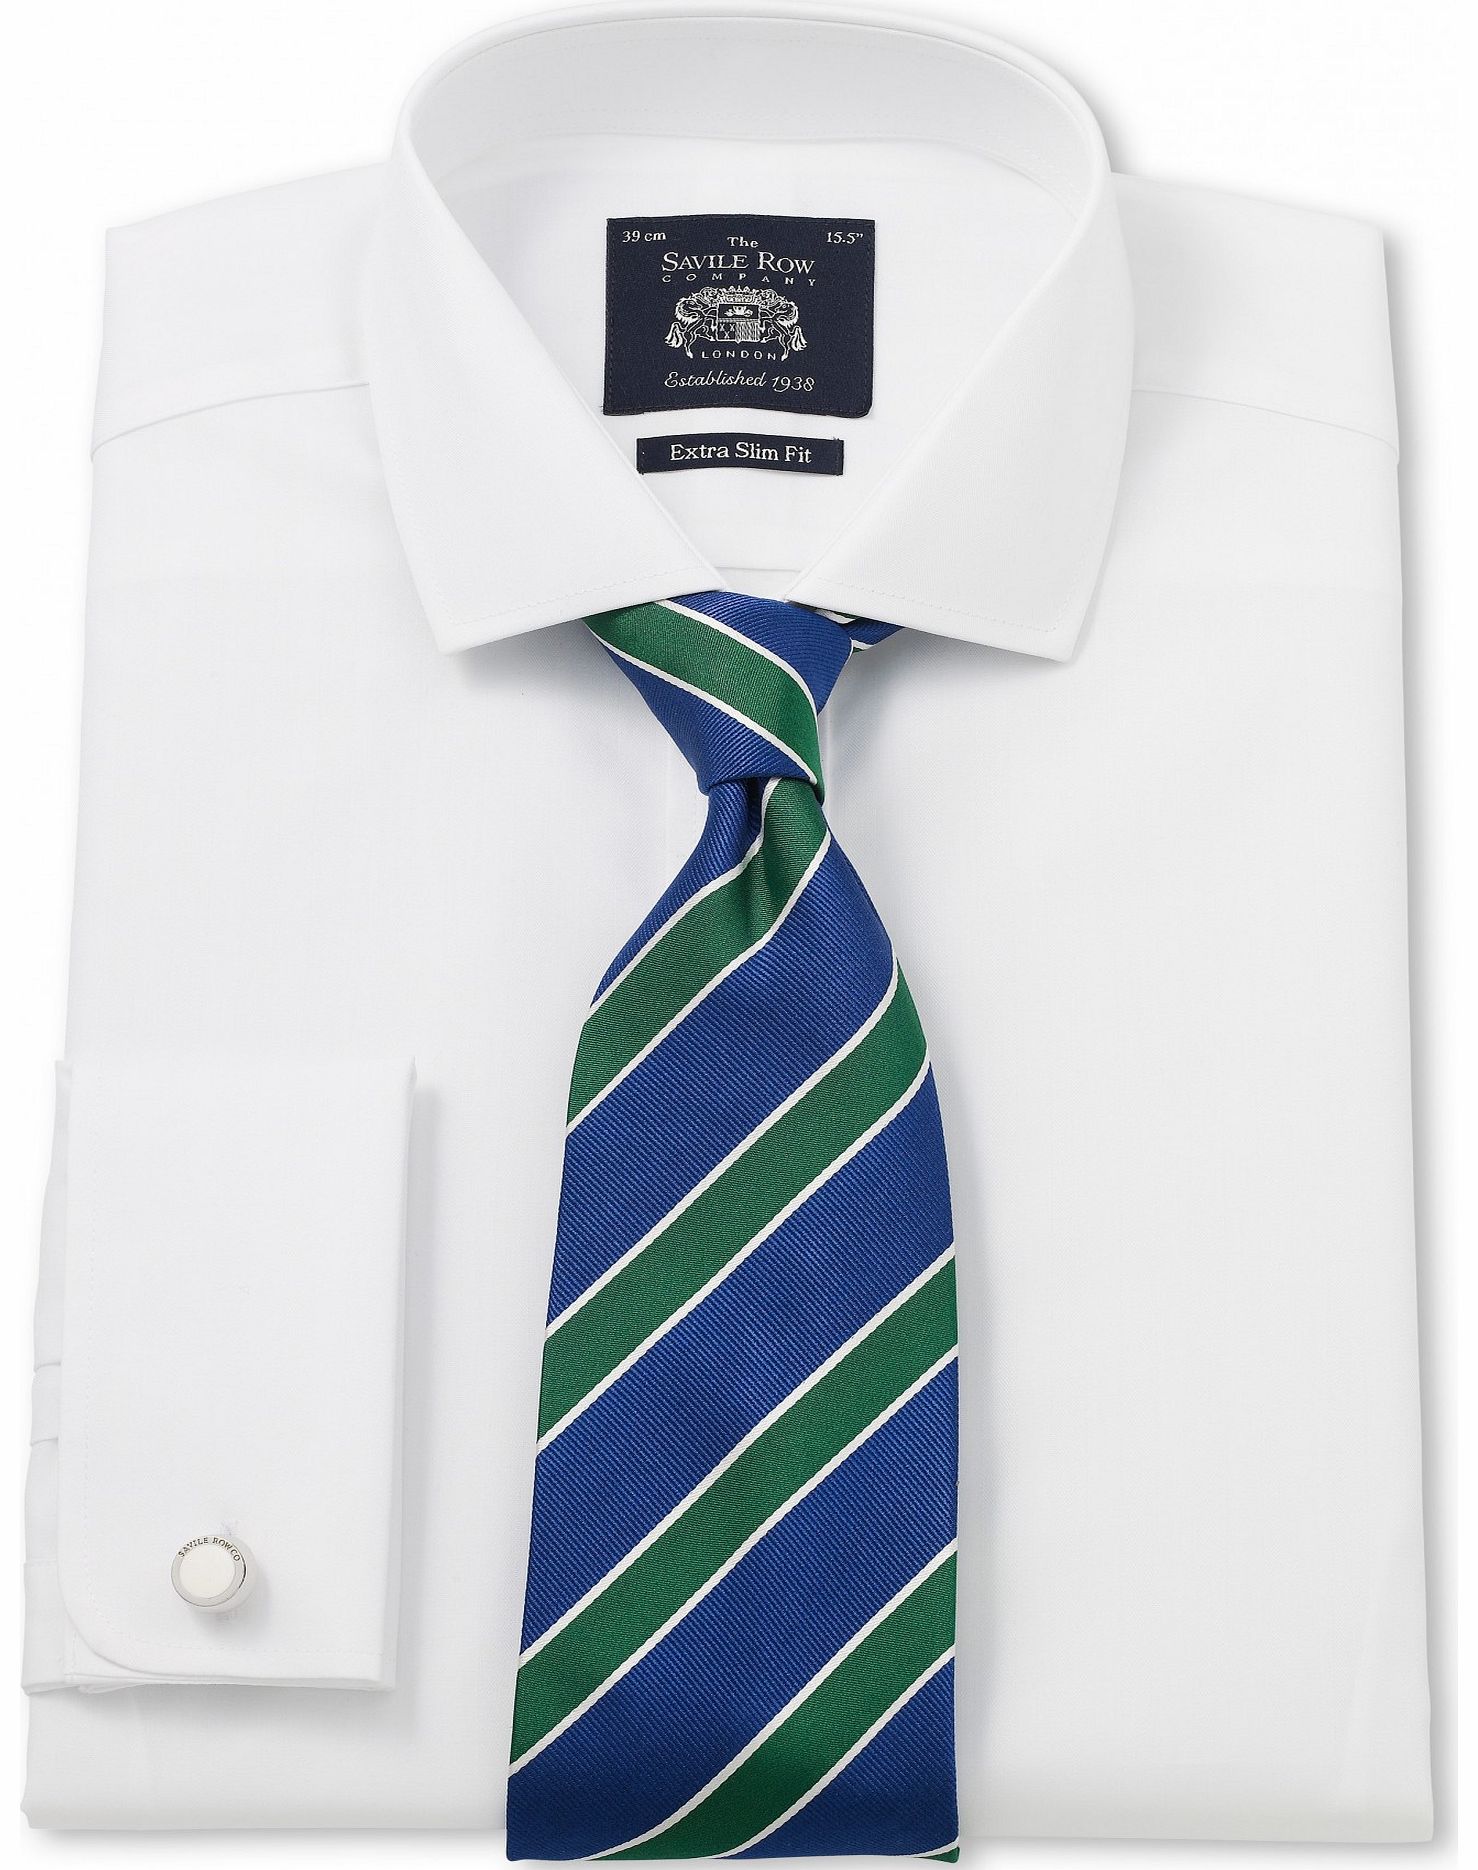 Savile Row Company White Luxury Herringbone Extra Slim Fit Shirt 15